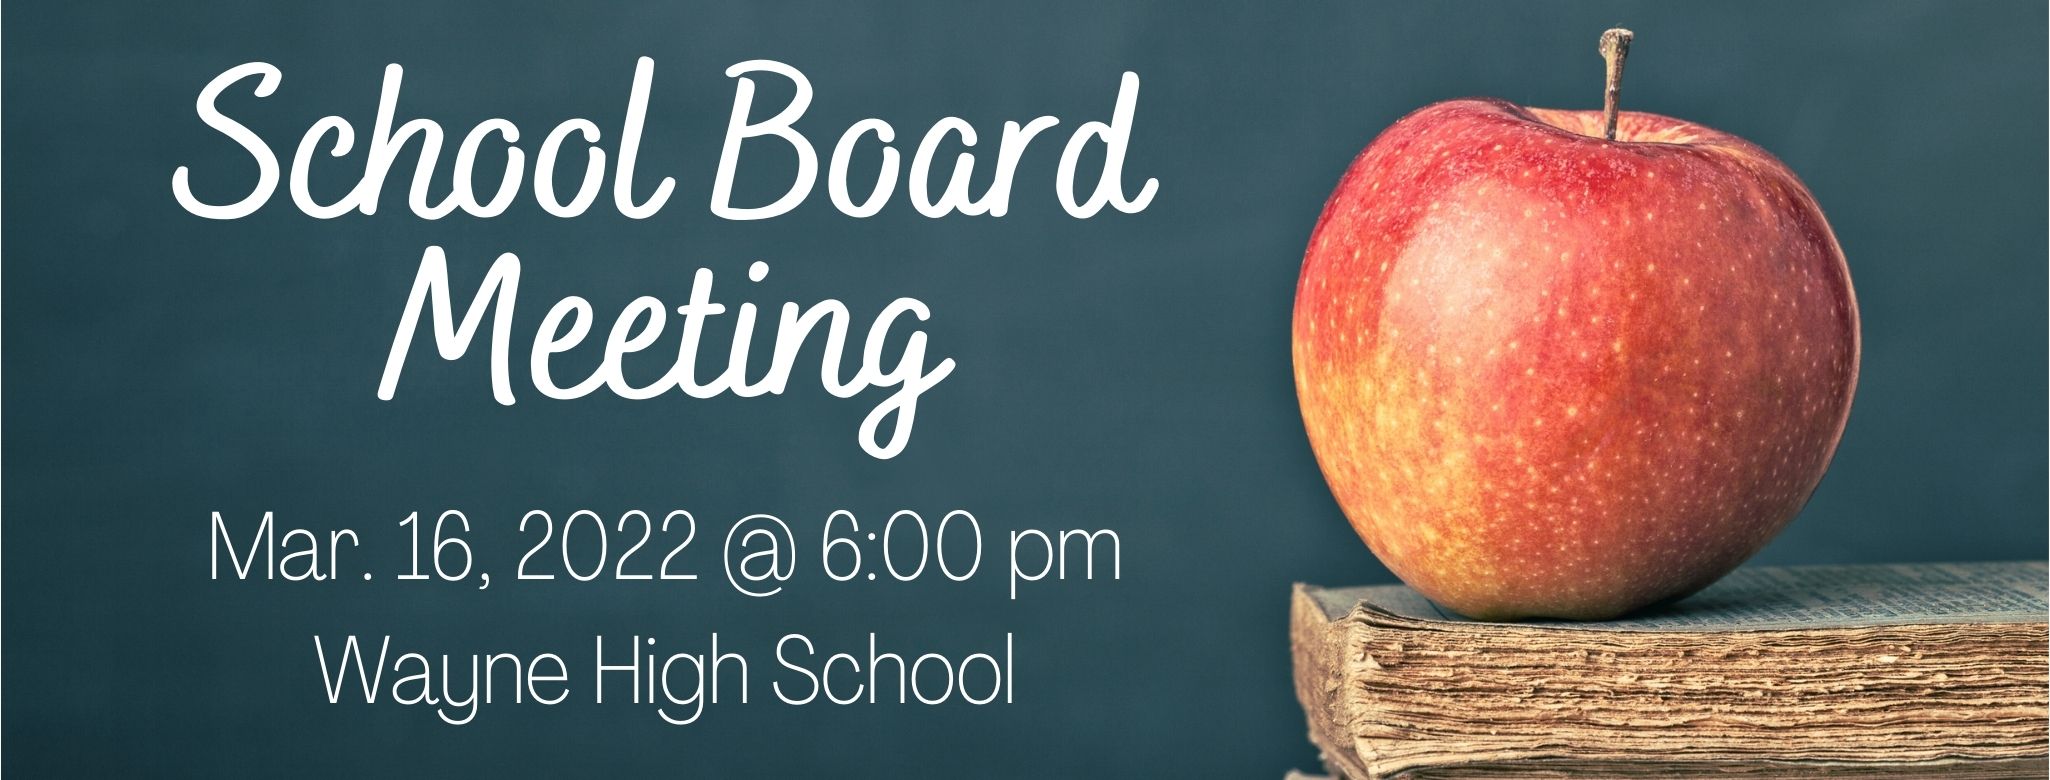 School Board Meeting Mar2022